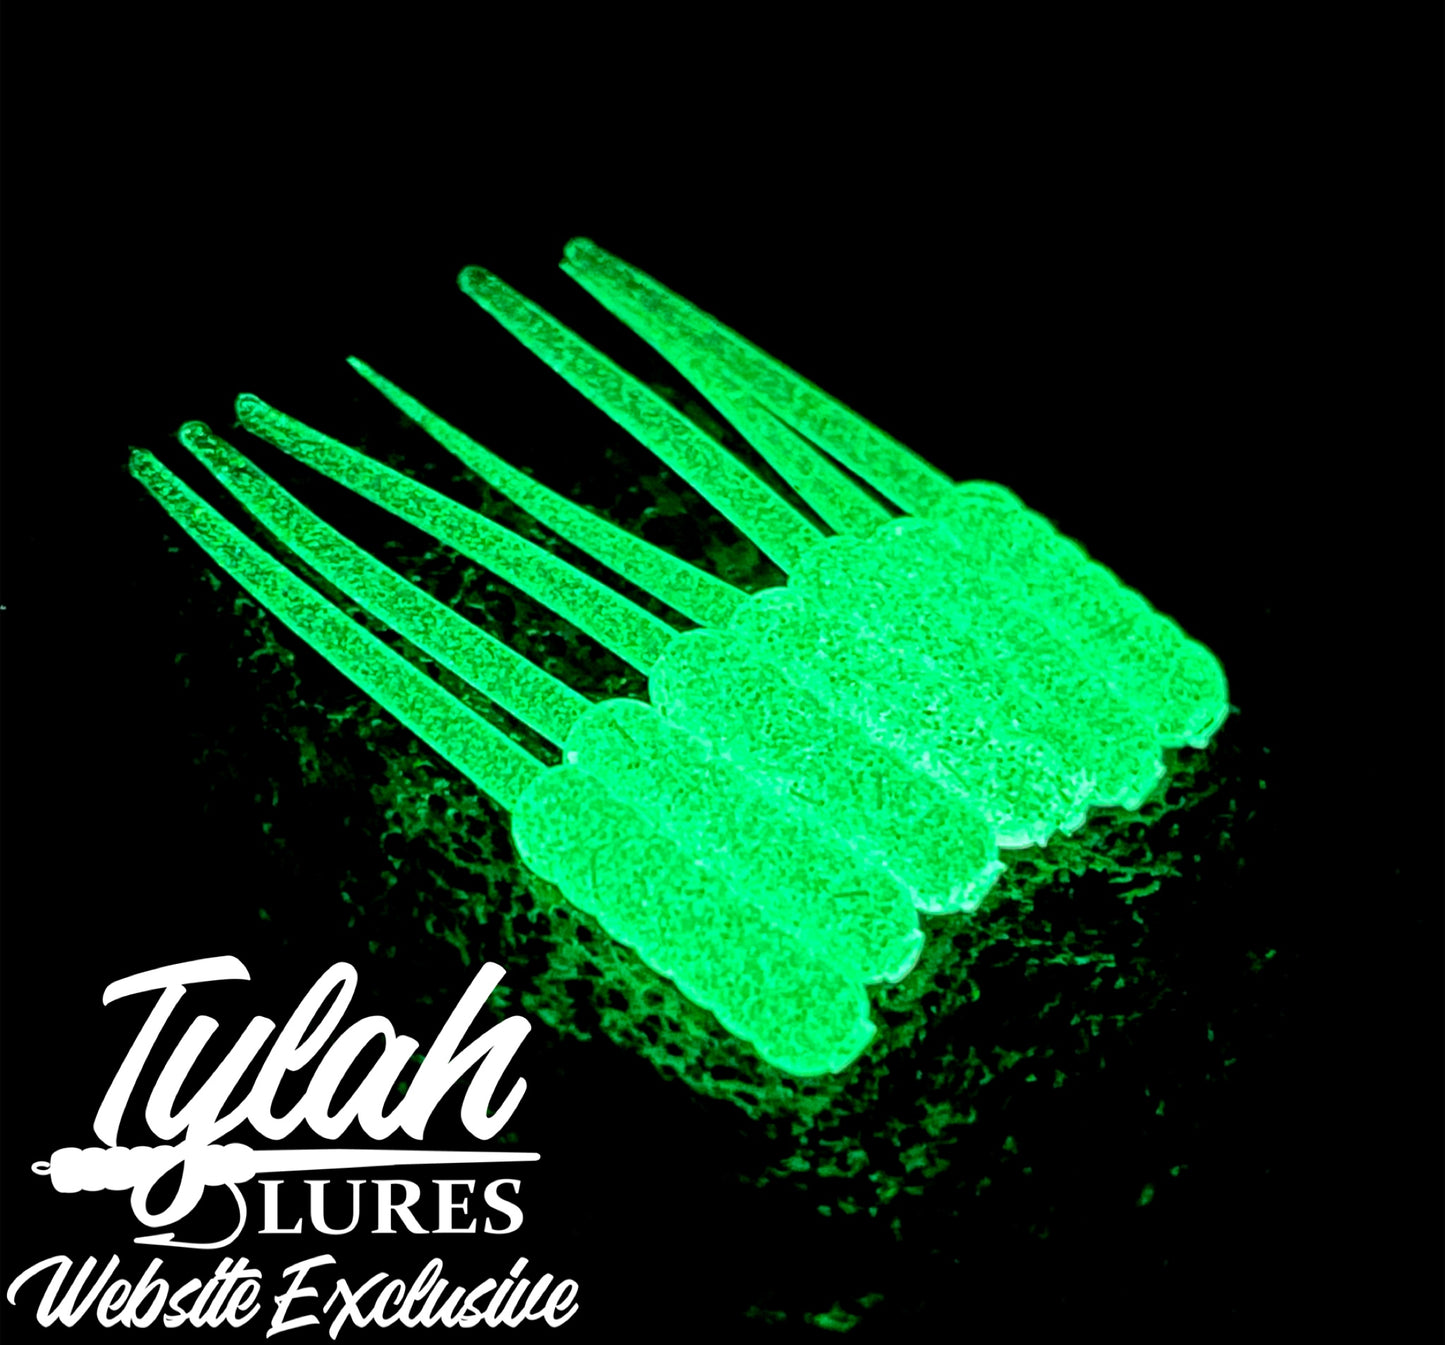 TylahLures Website Exclusive Pearl Green Glow 1.5in.